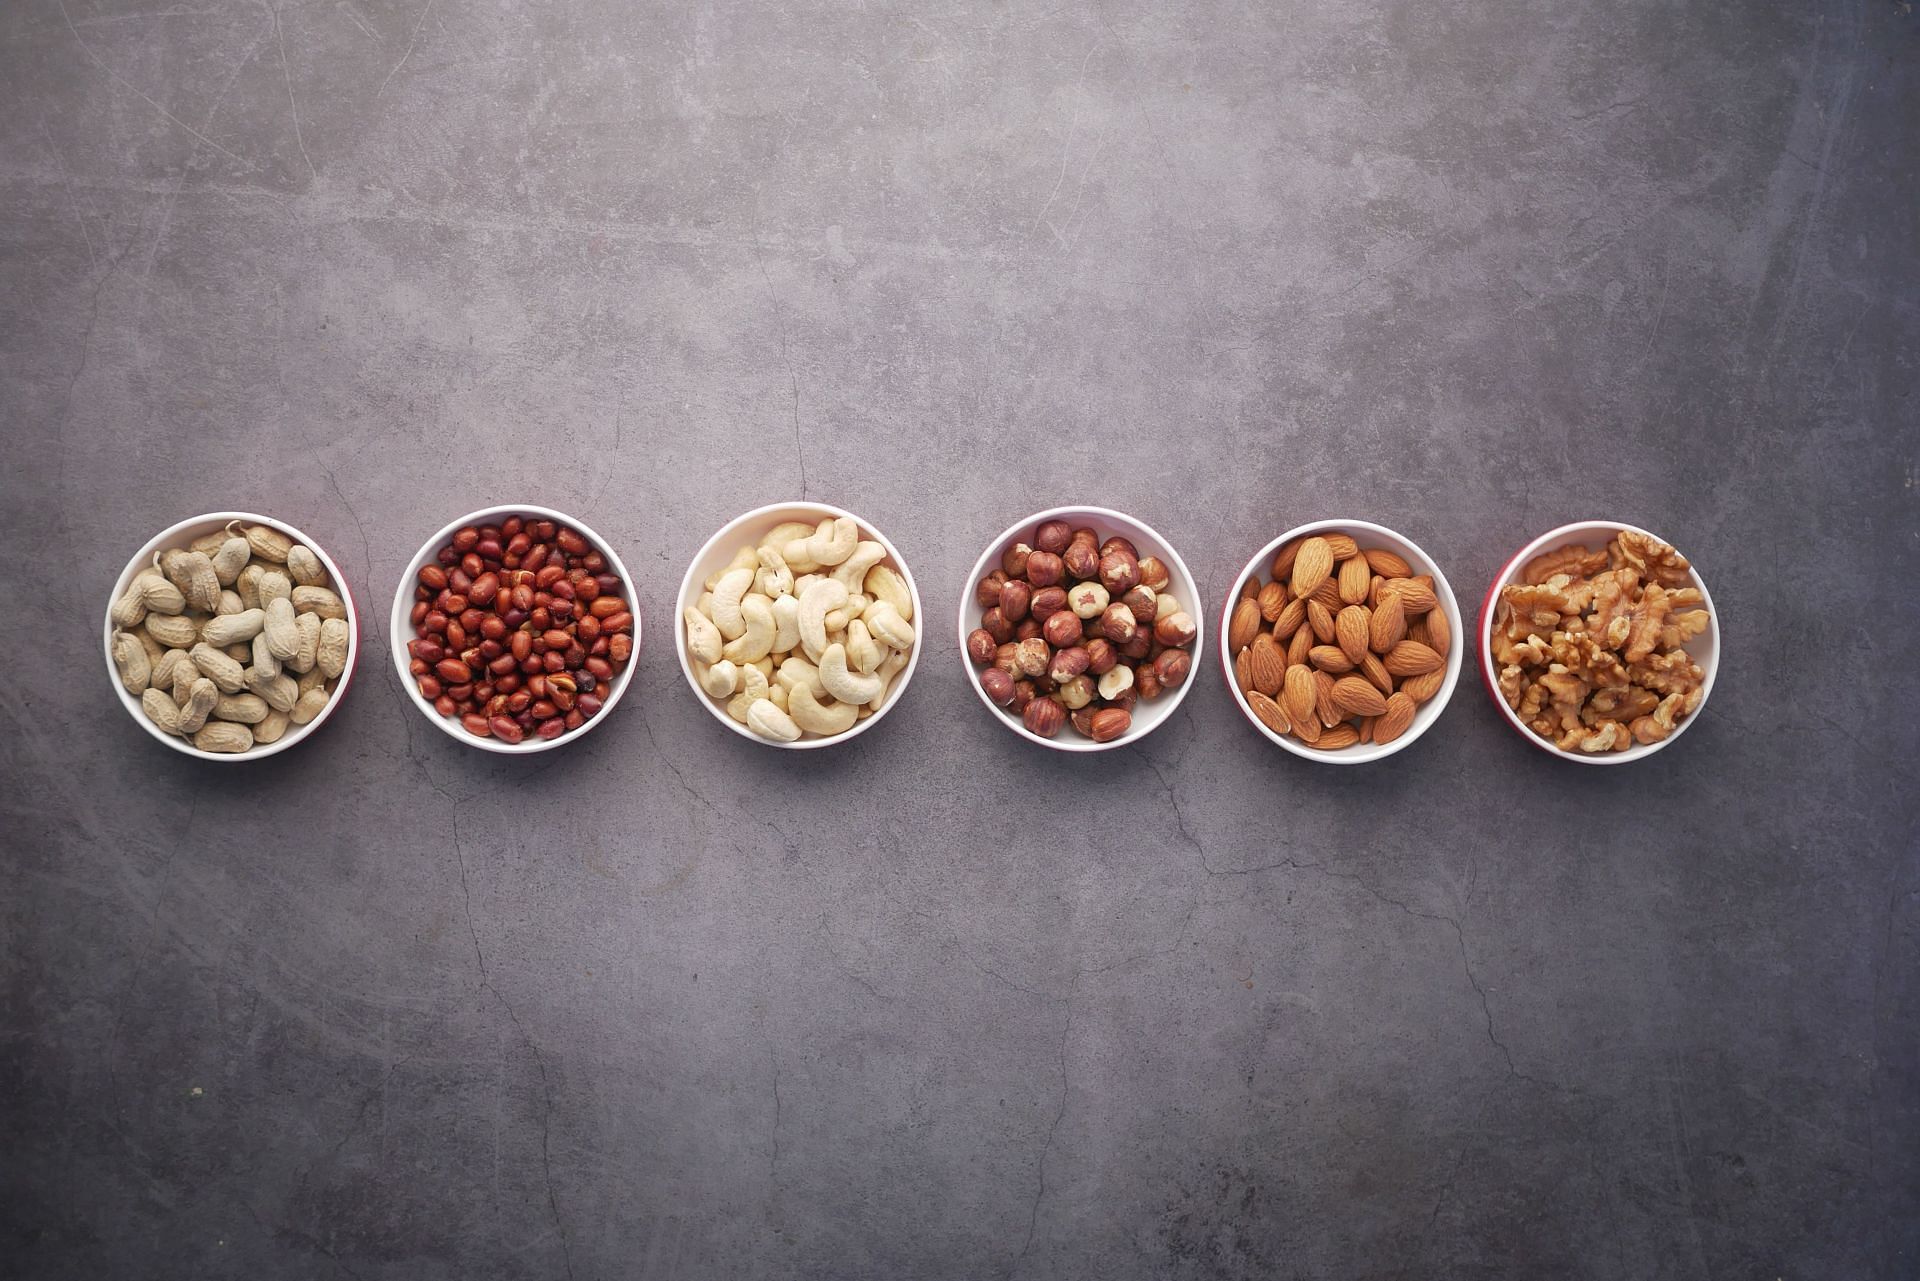 Nuts satiate and keep hunger away. (Image Via Unsplash/Towfiqu barbhuiya)